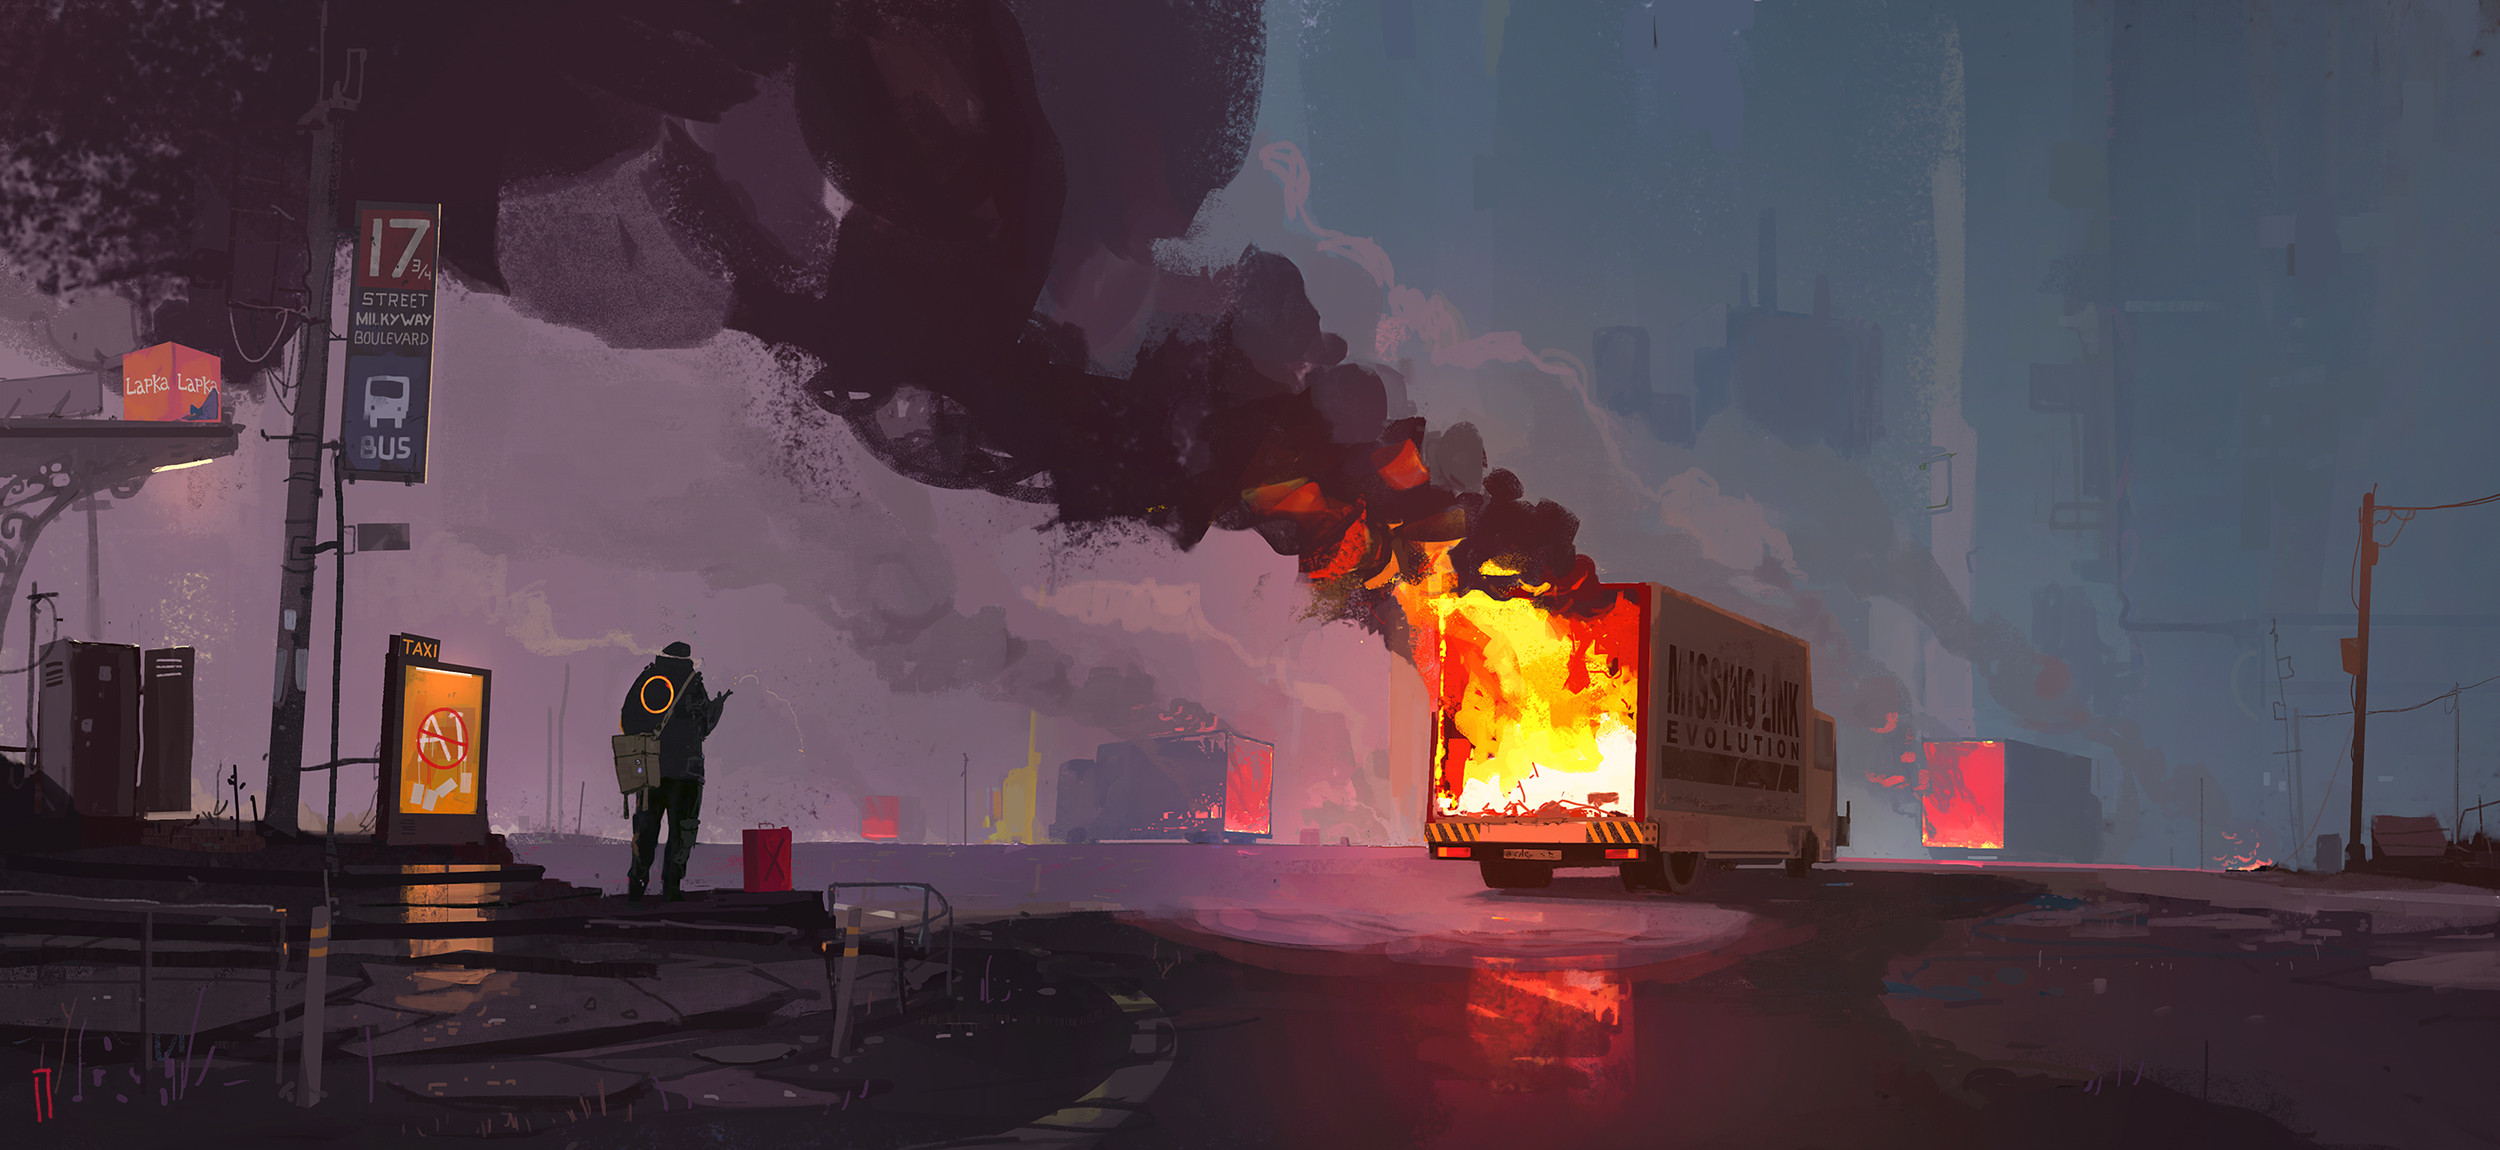 General 2500x1150 Ismail Inceoglu digital art artwork illustration street fire smoke truck vehicle